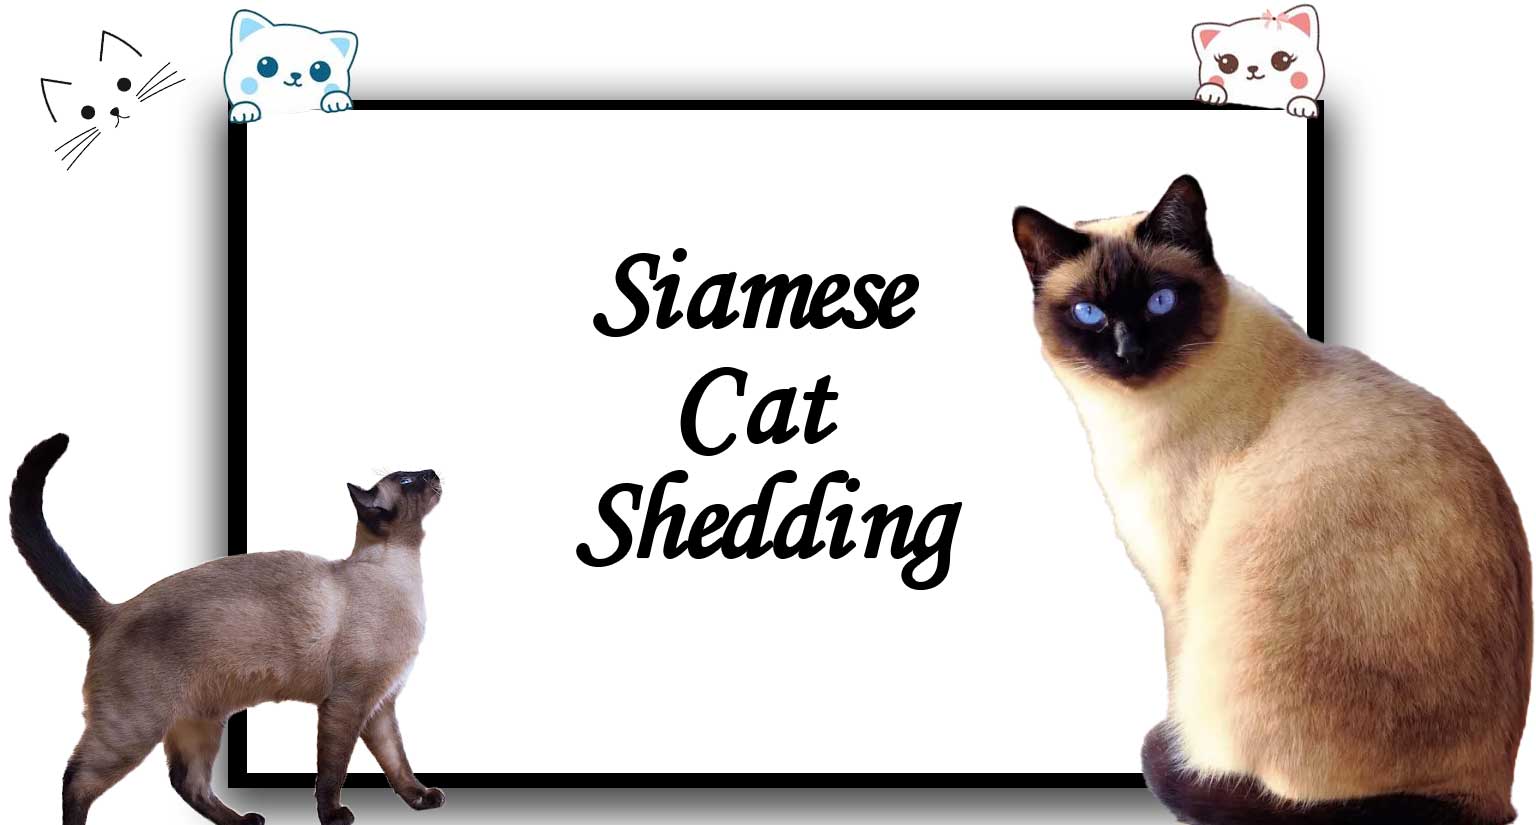 Siamese cat shedding